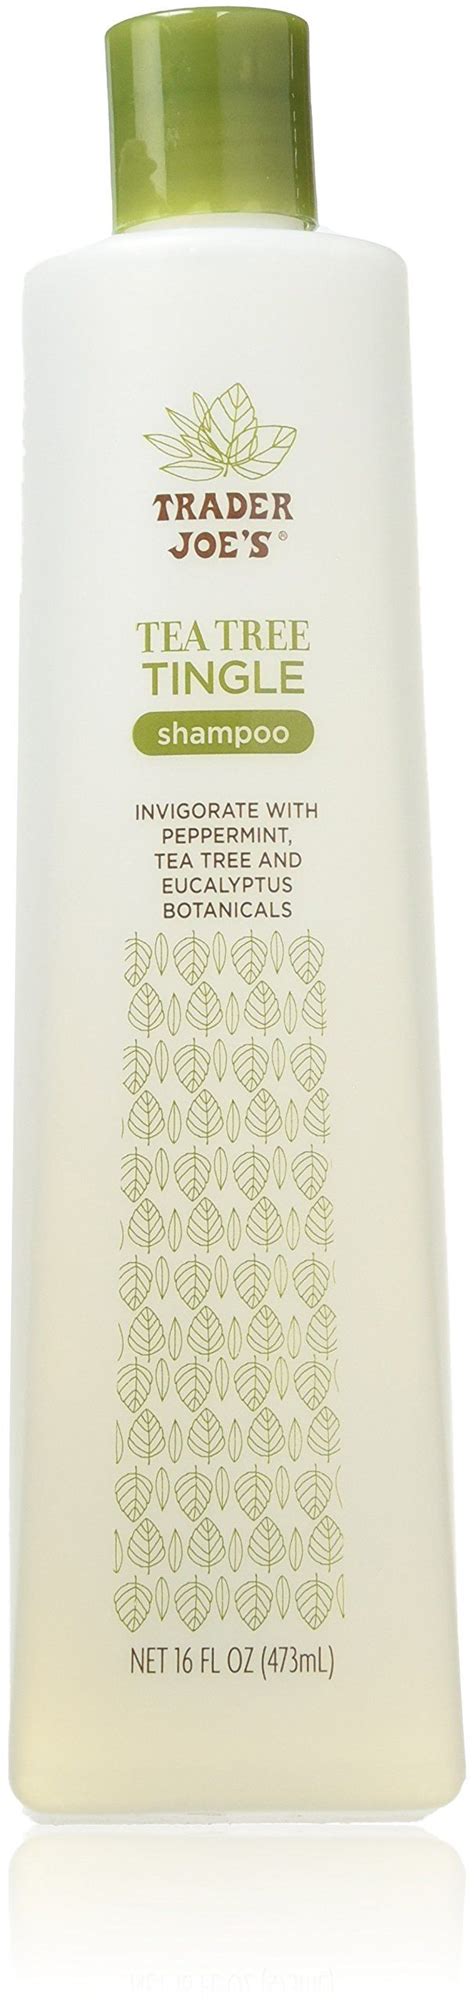 trader joe s tea tree tingle shampoo with peppermint tea tree and eucalyptus botanicals 16